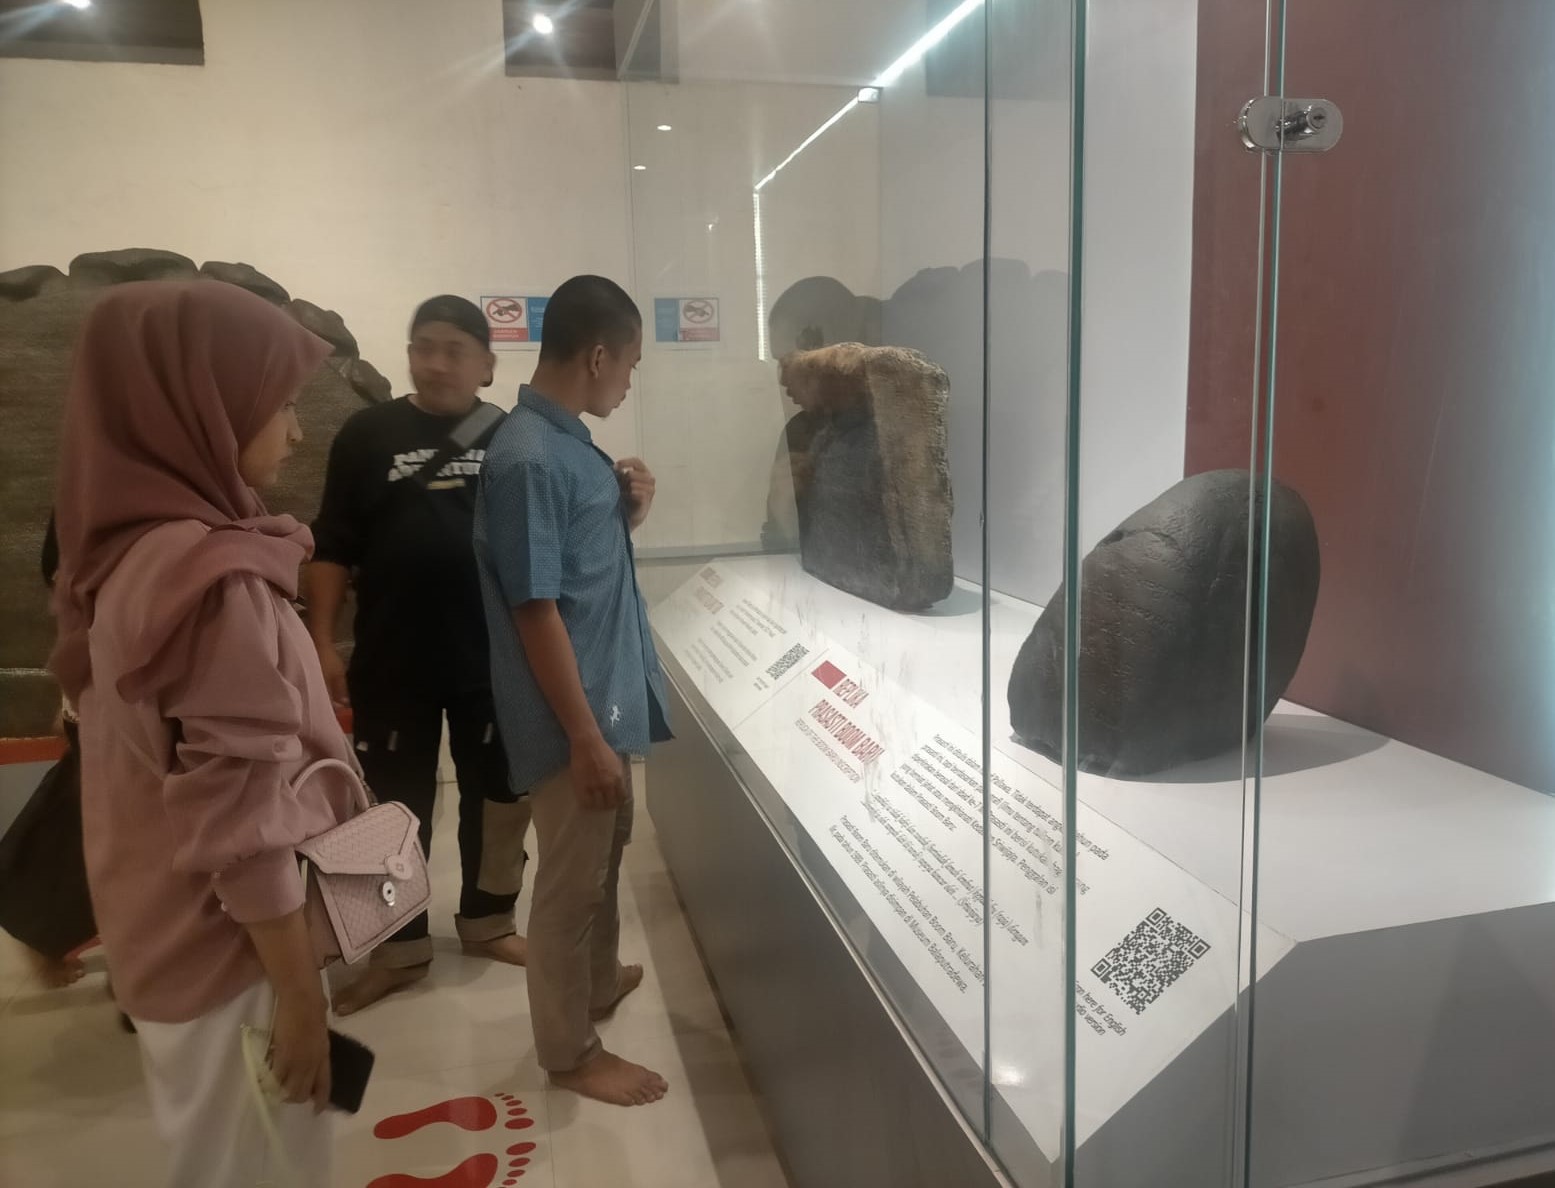 Keliling Museum Kota Palembang SMB 2, Tambah Wawasan Sekaligus Rekreasi. Cek Tarif Tiket Masuknya !